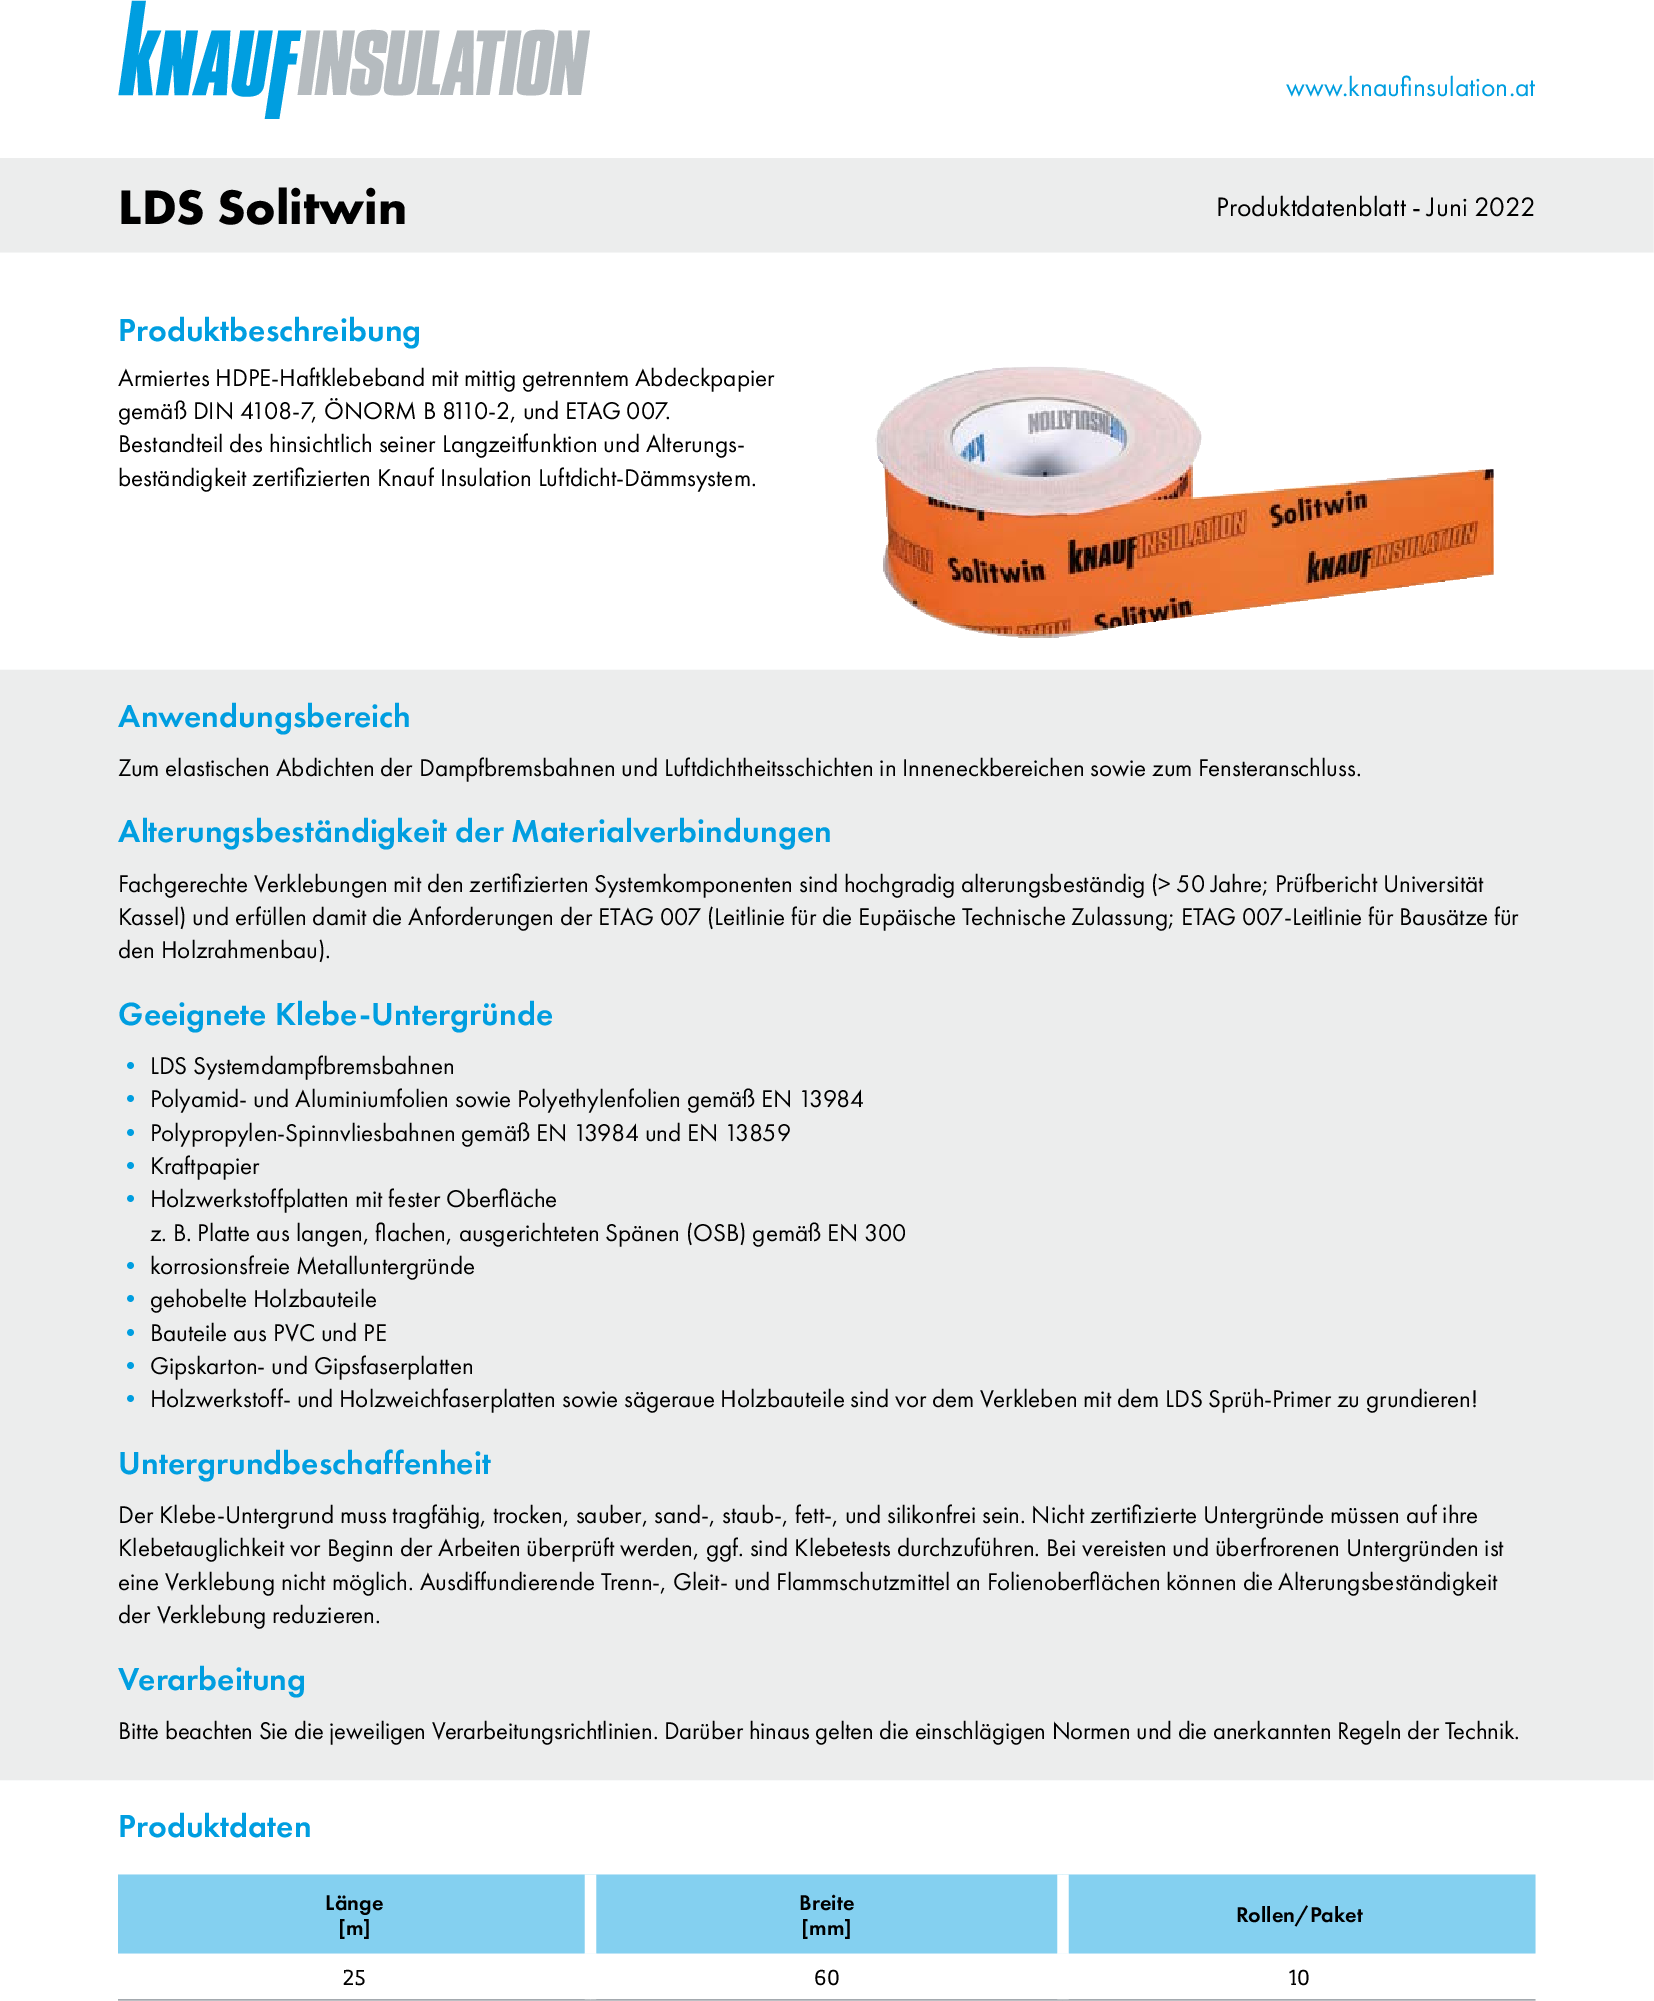 LDS Solitwin, Produktdatenblatt